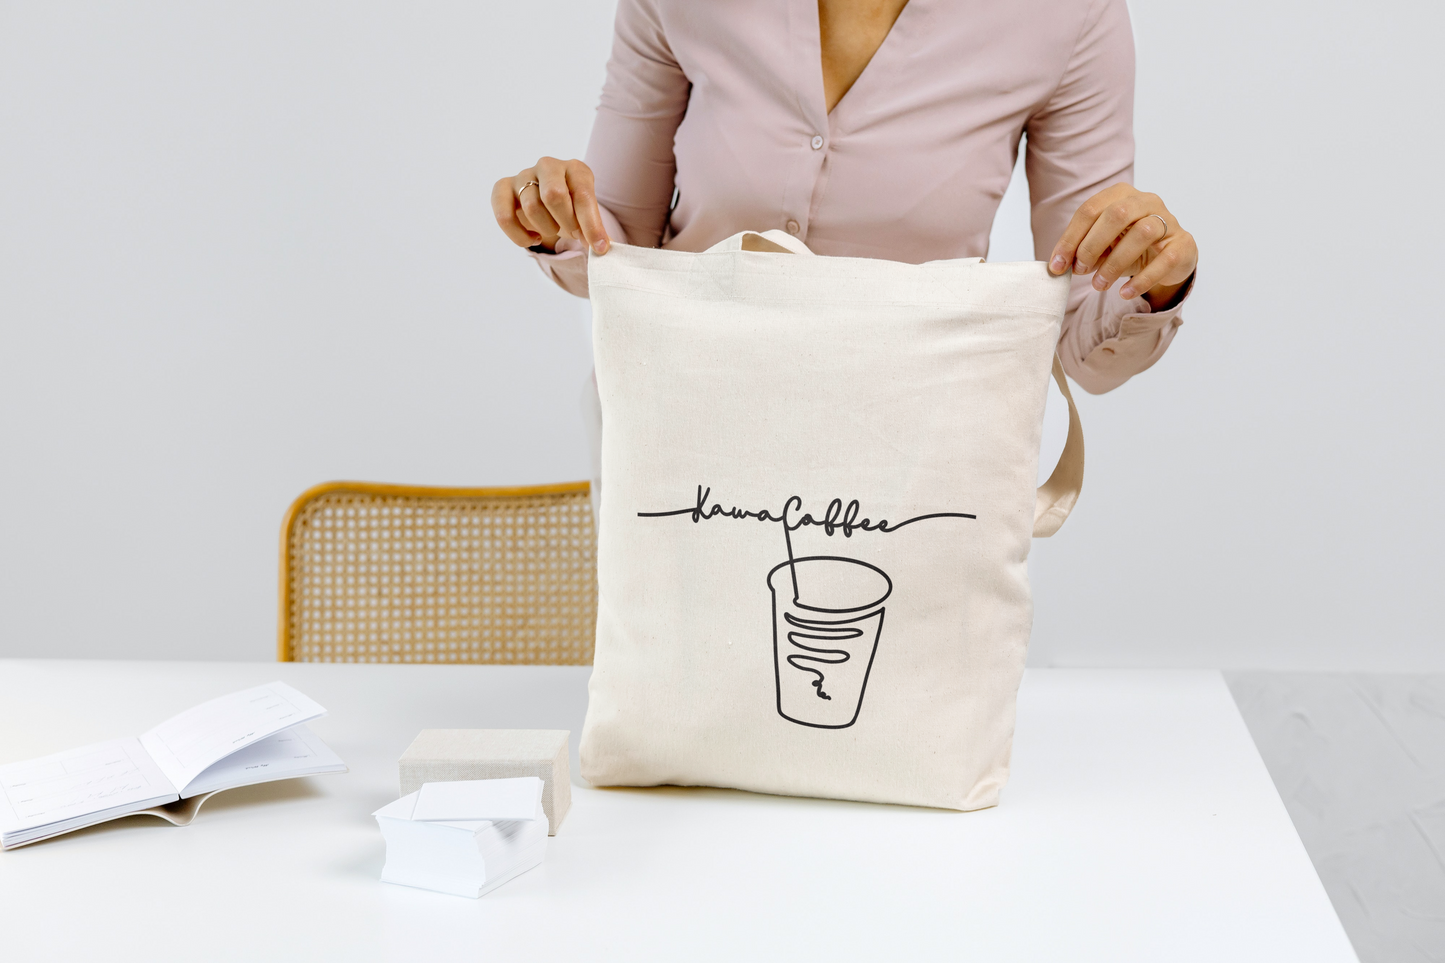 Limited Edition Kawa Coffee Tote Bag